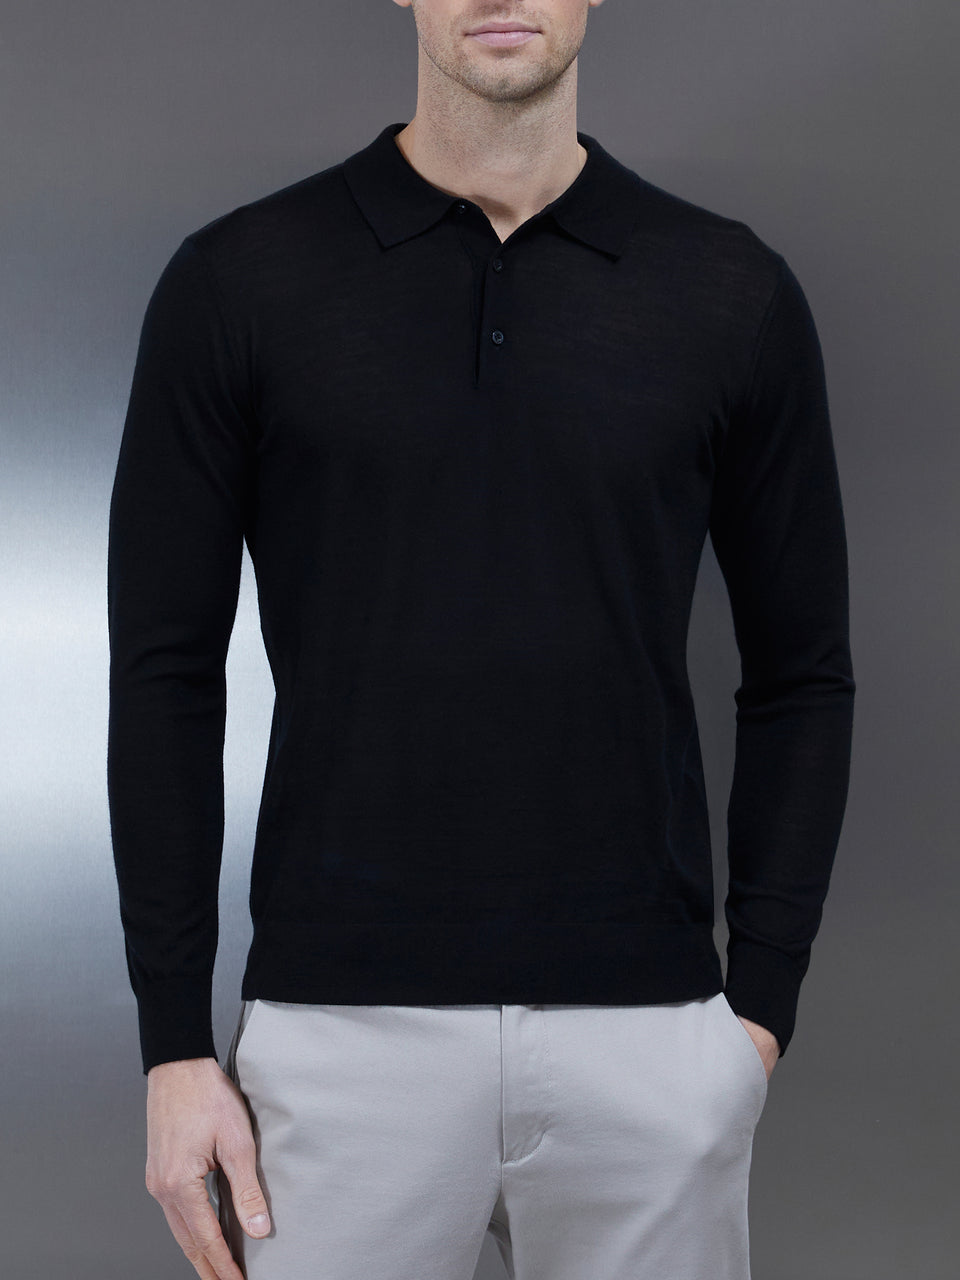 Merino Wool Long Sleeve Button Polo Shirt in Black